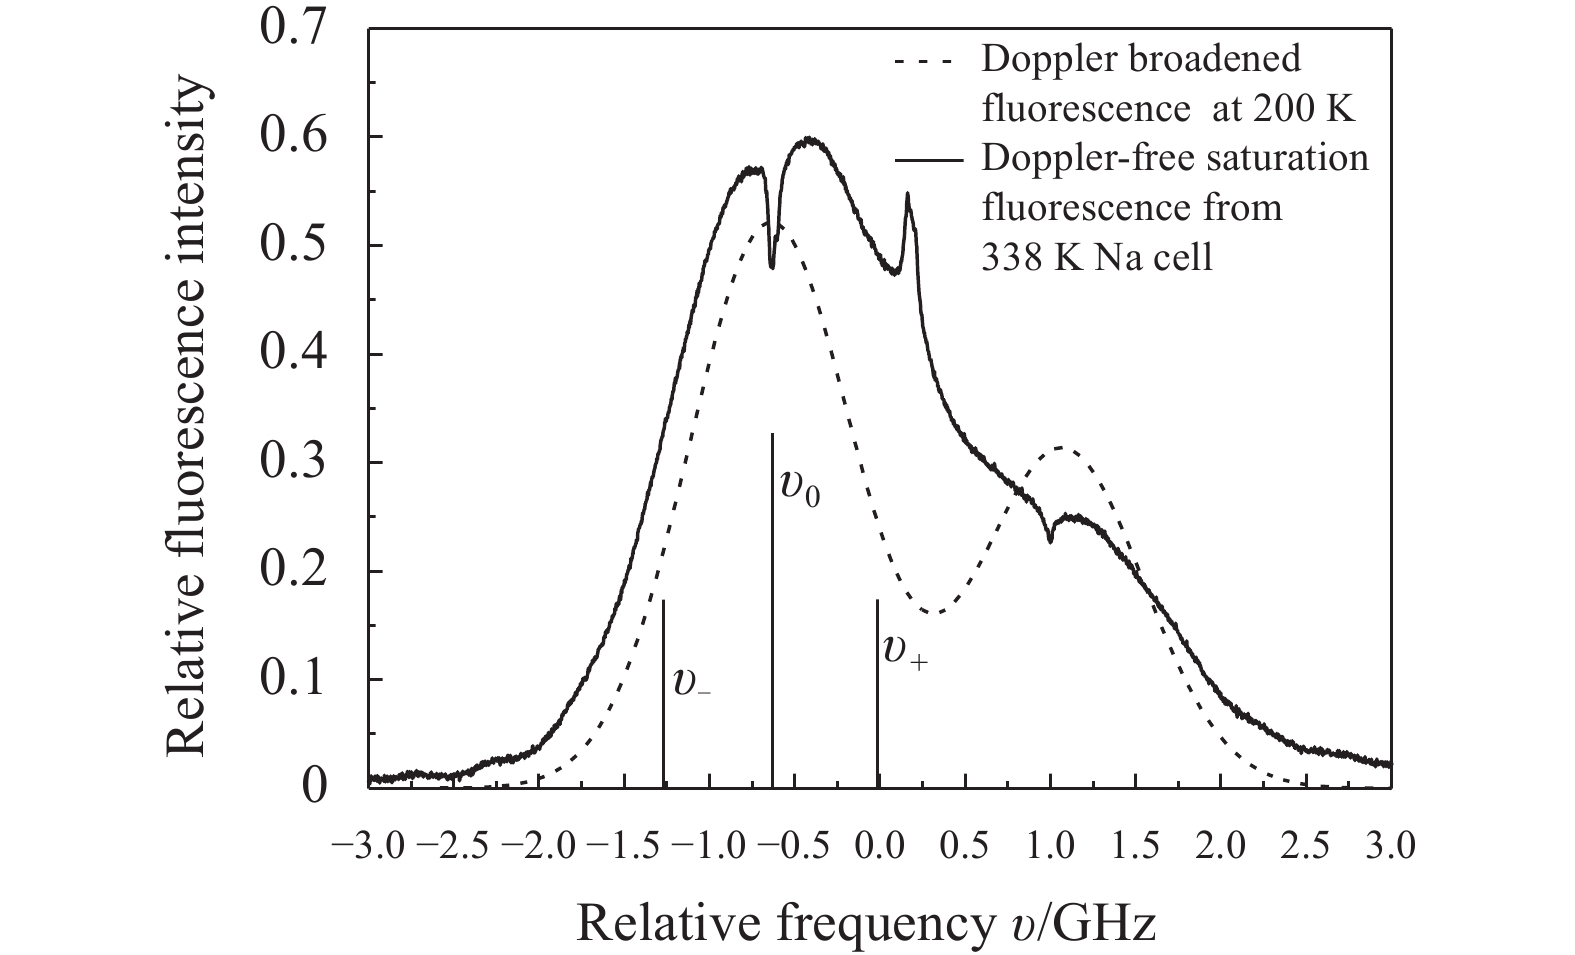 Doppler-free saturation fluorescence spectrum and Doppler broadened fluorescence spectrum